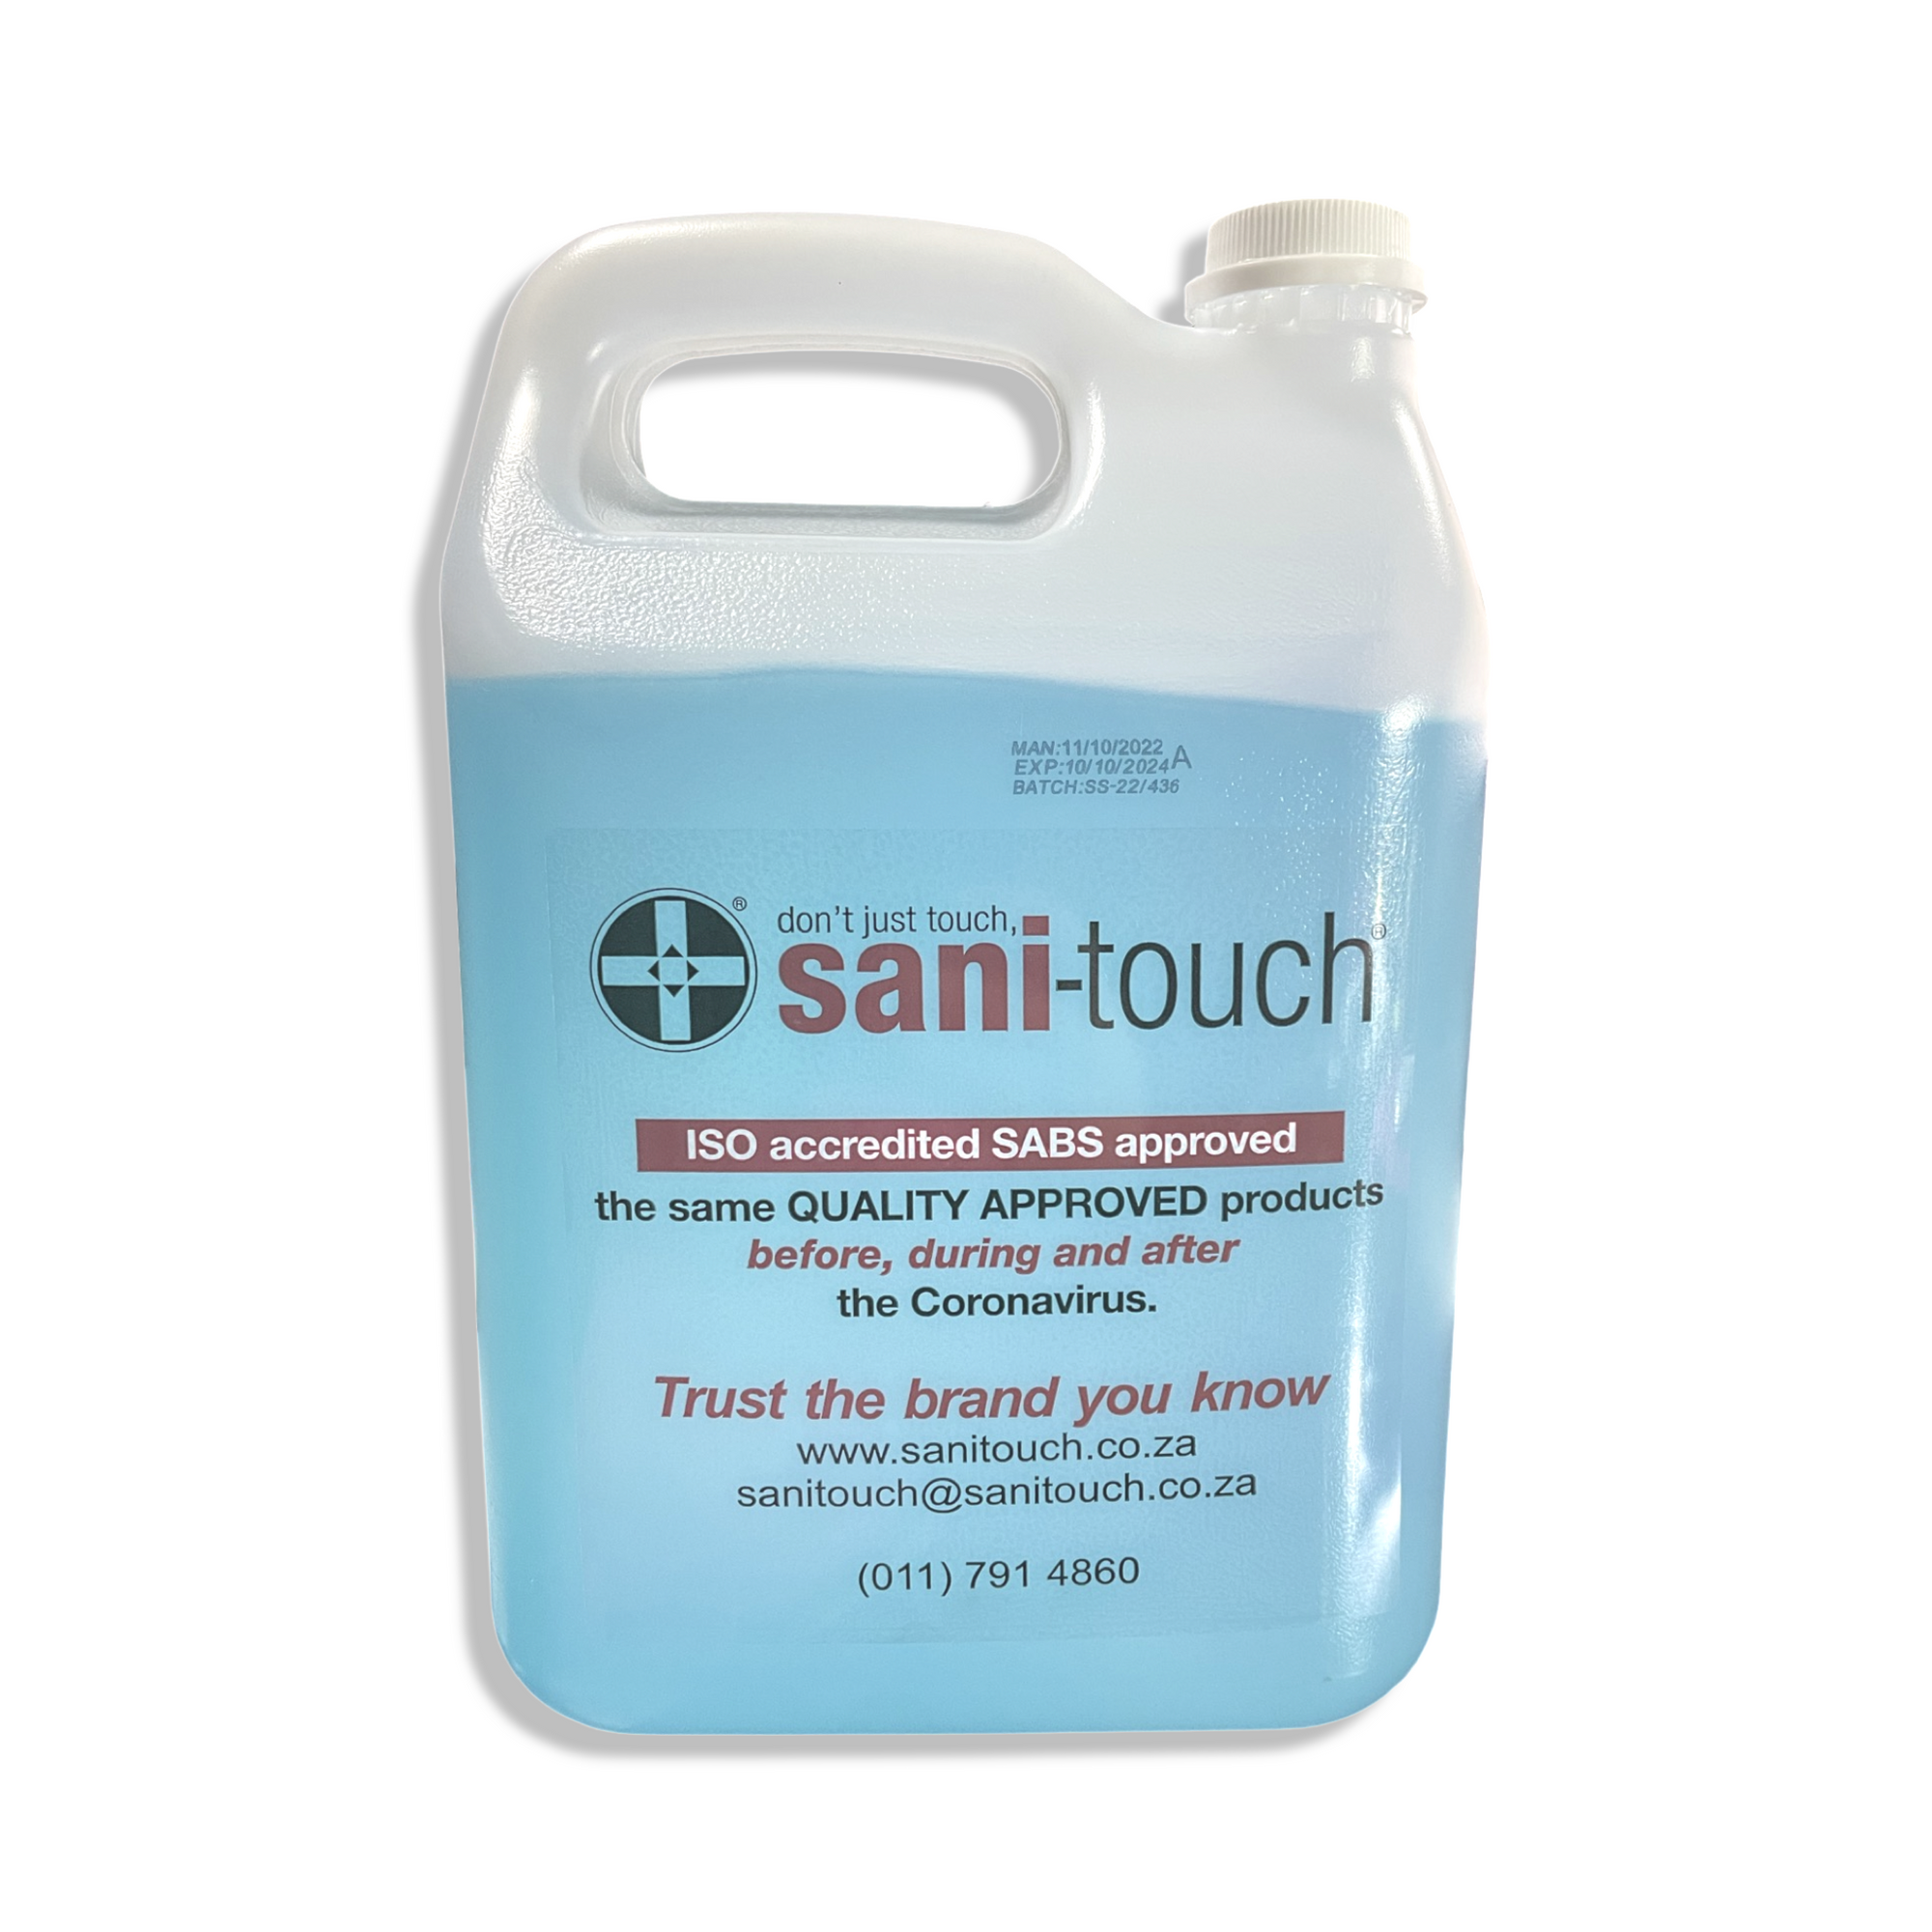 Sani-touch Sanispray Refill 5 Liter